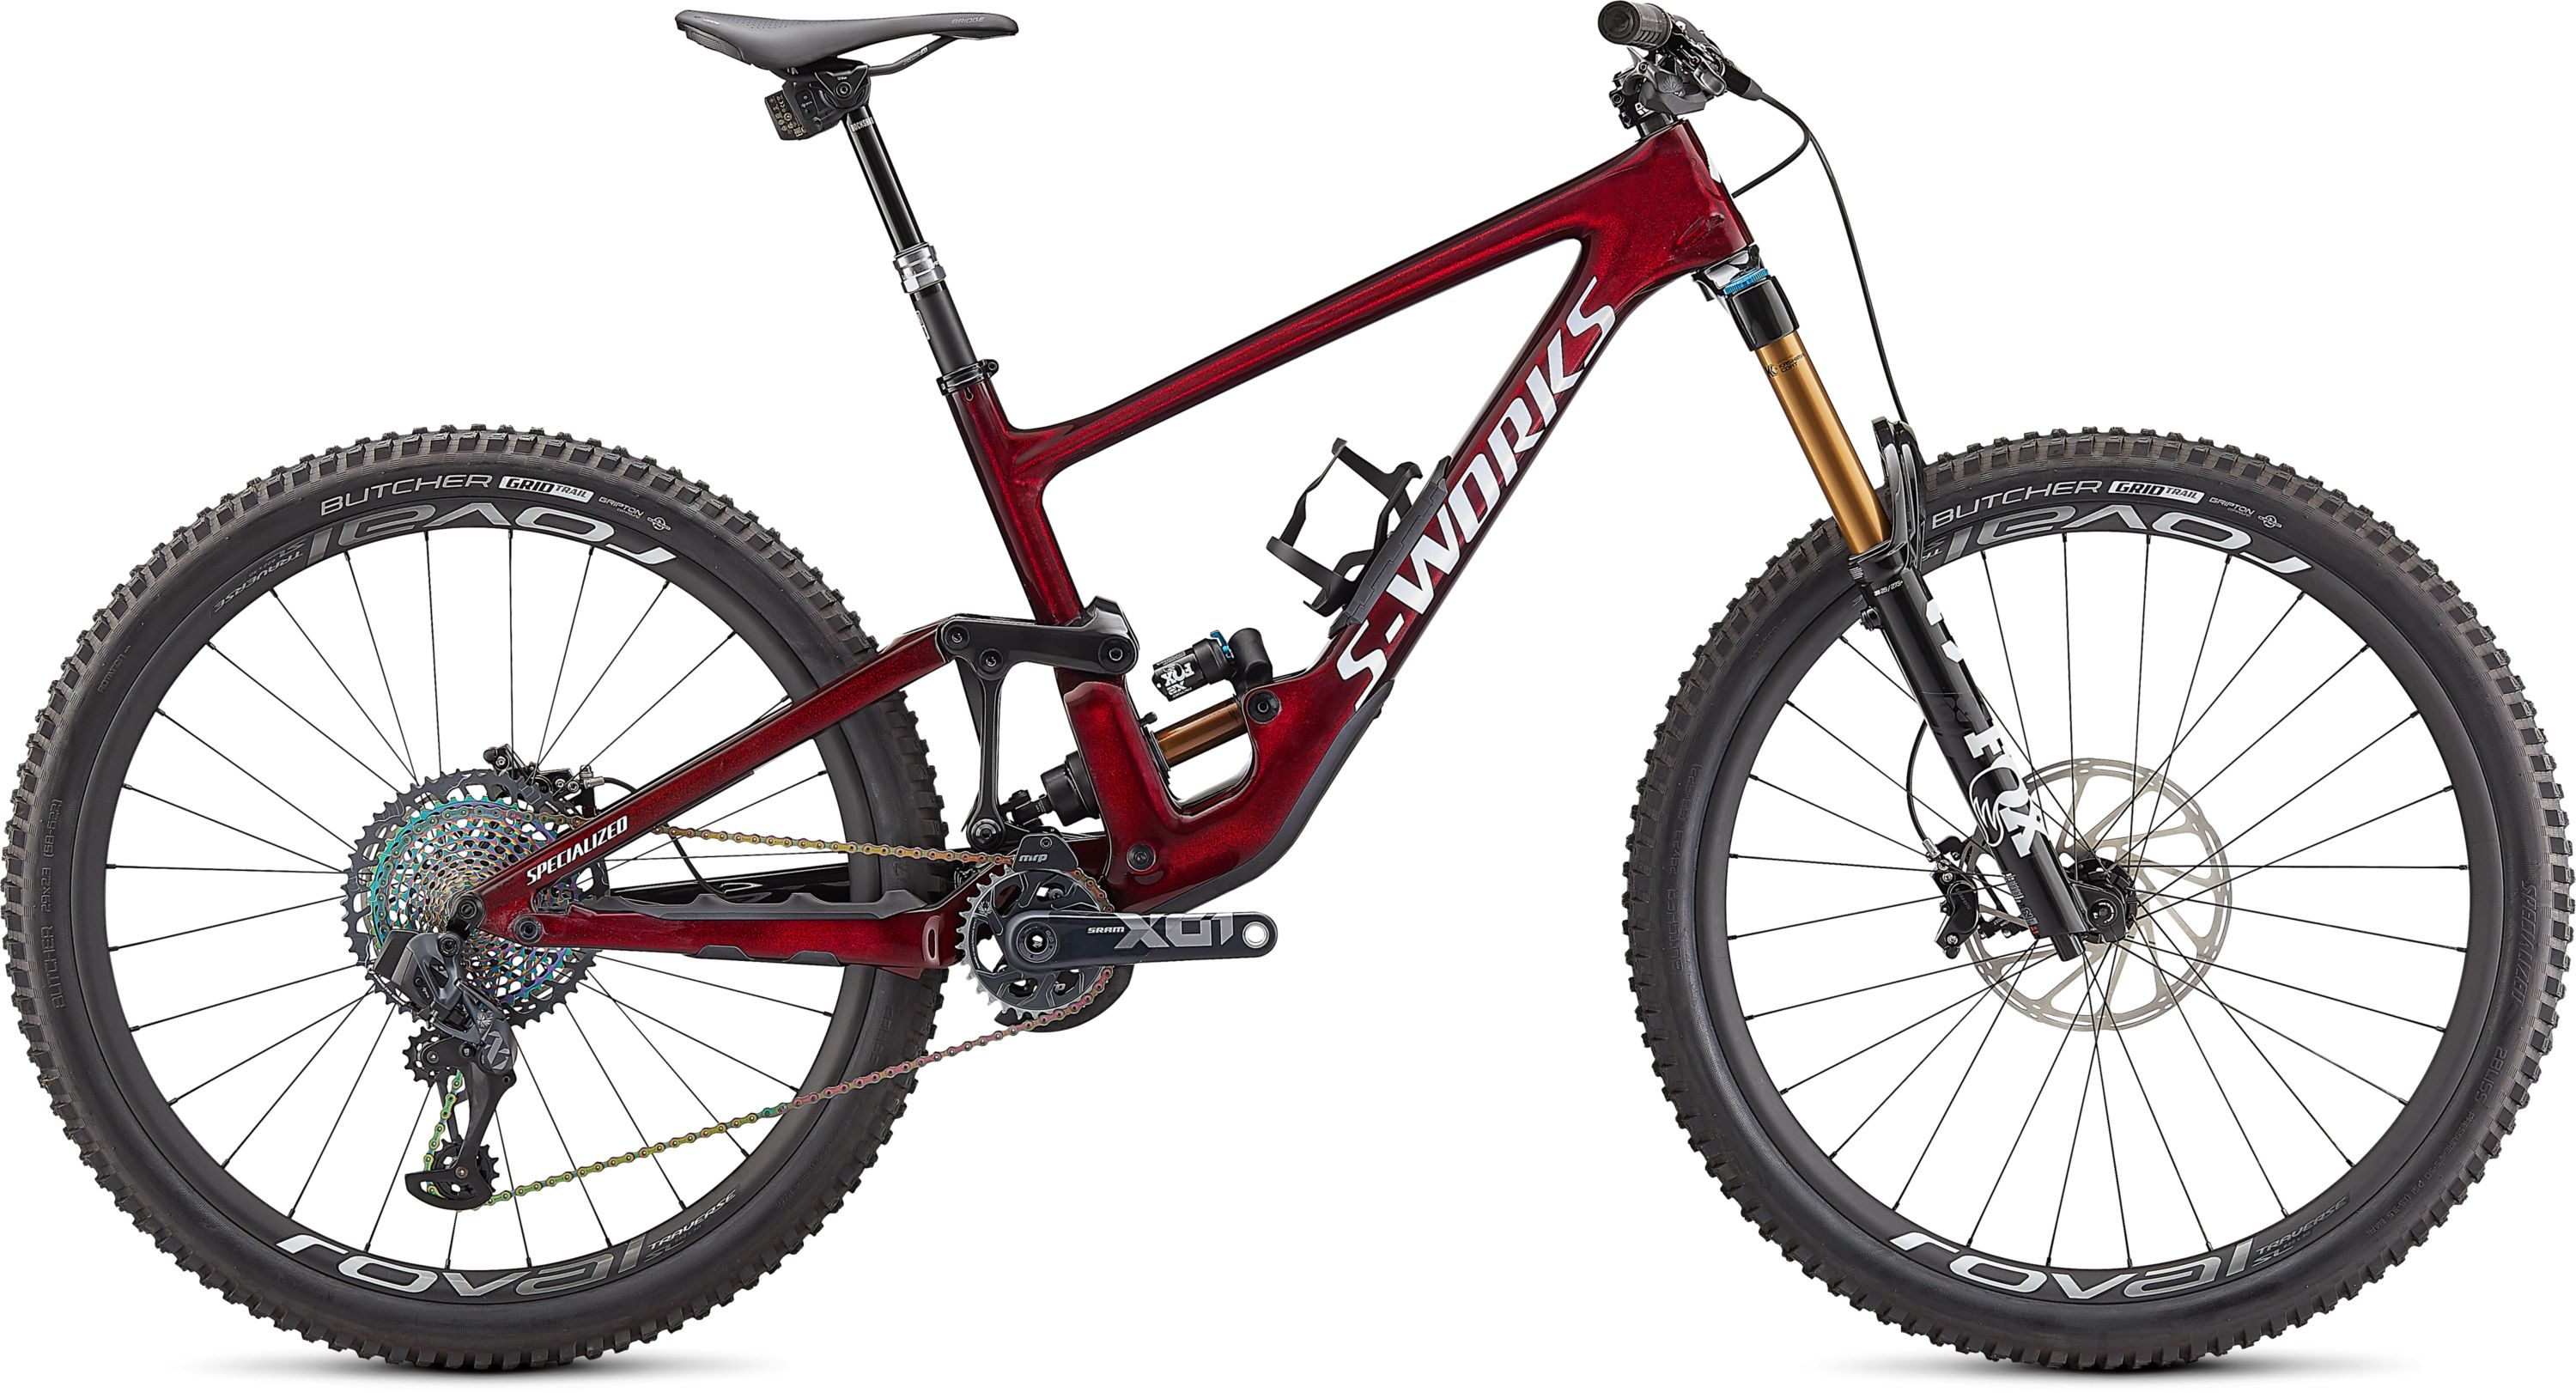 Specialized SWORKS Enduro Carbon 29er Mountain Bike 2021 £11500